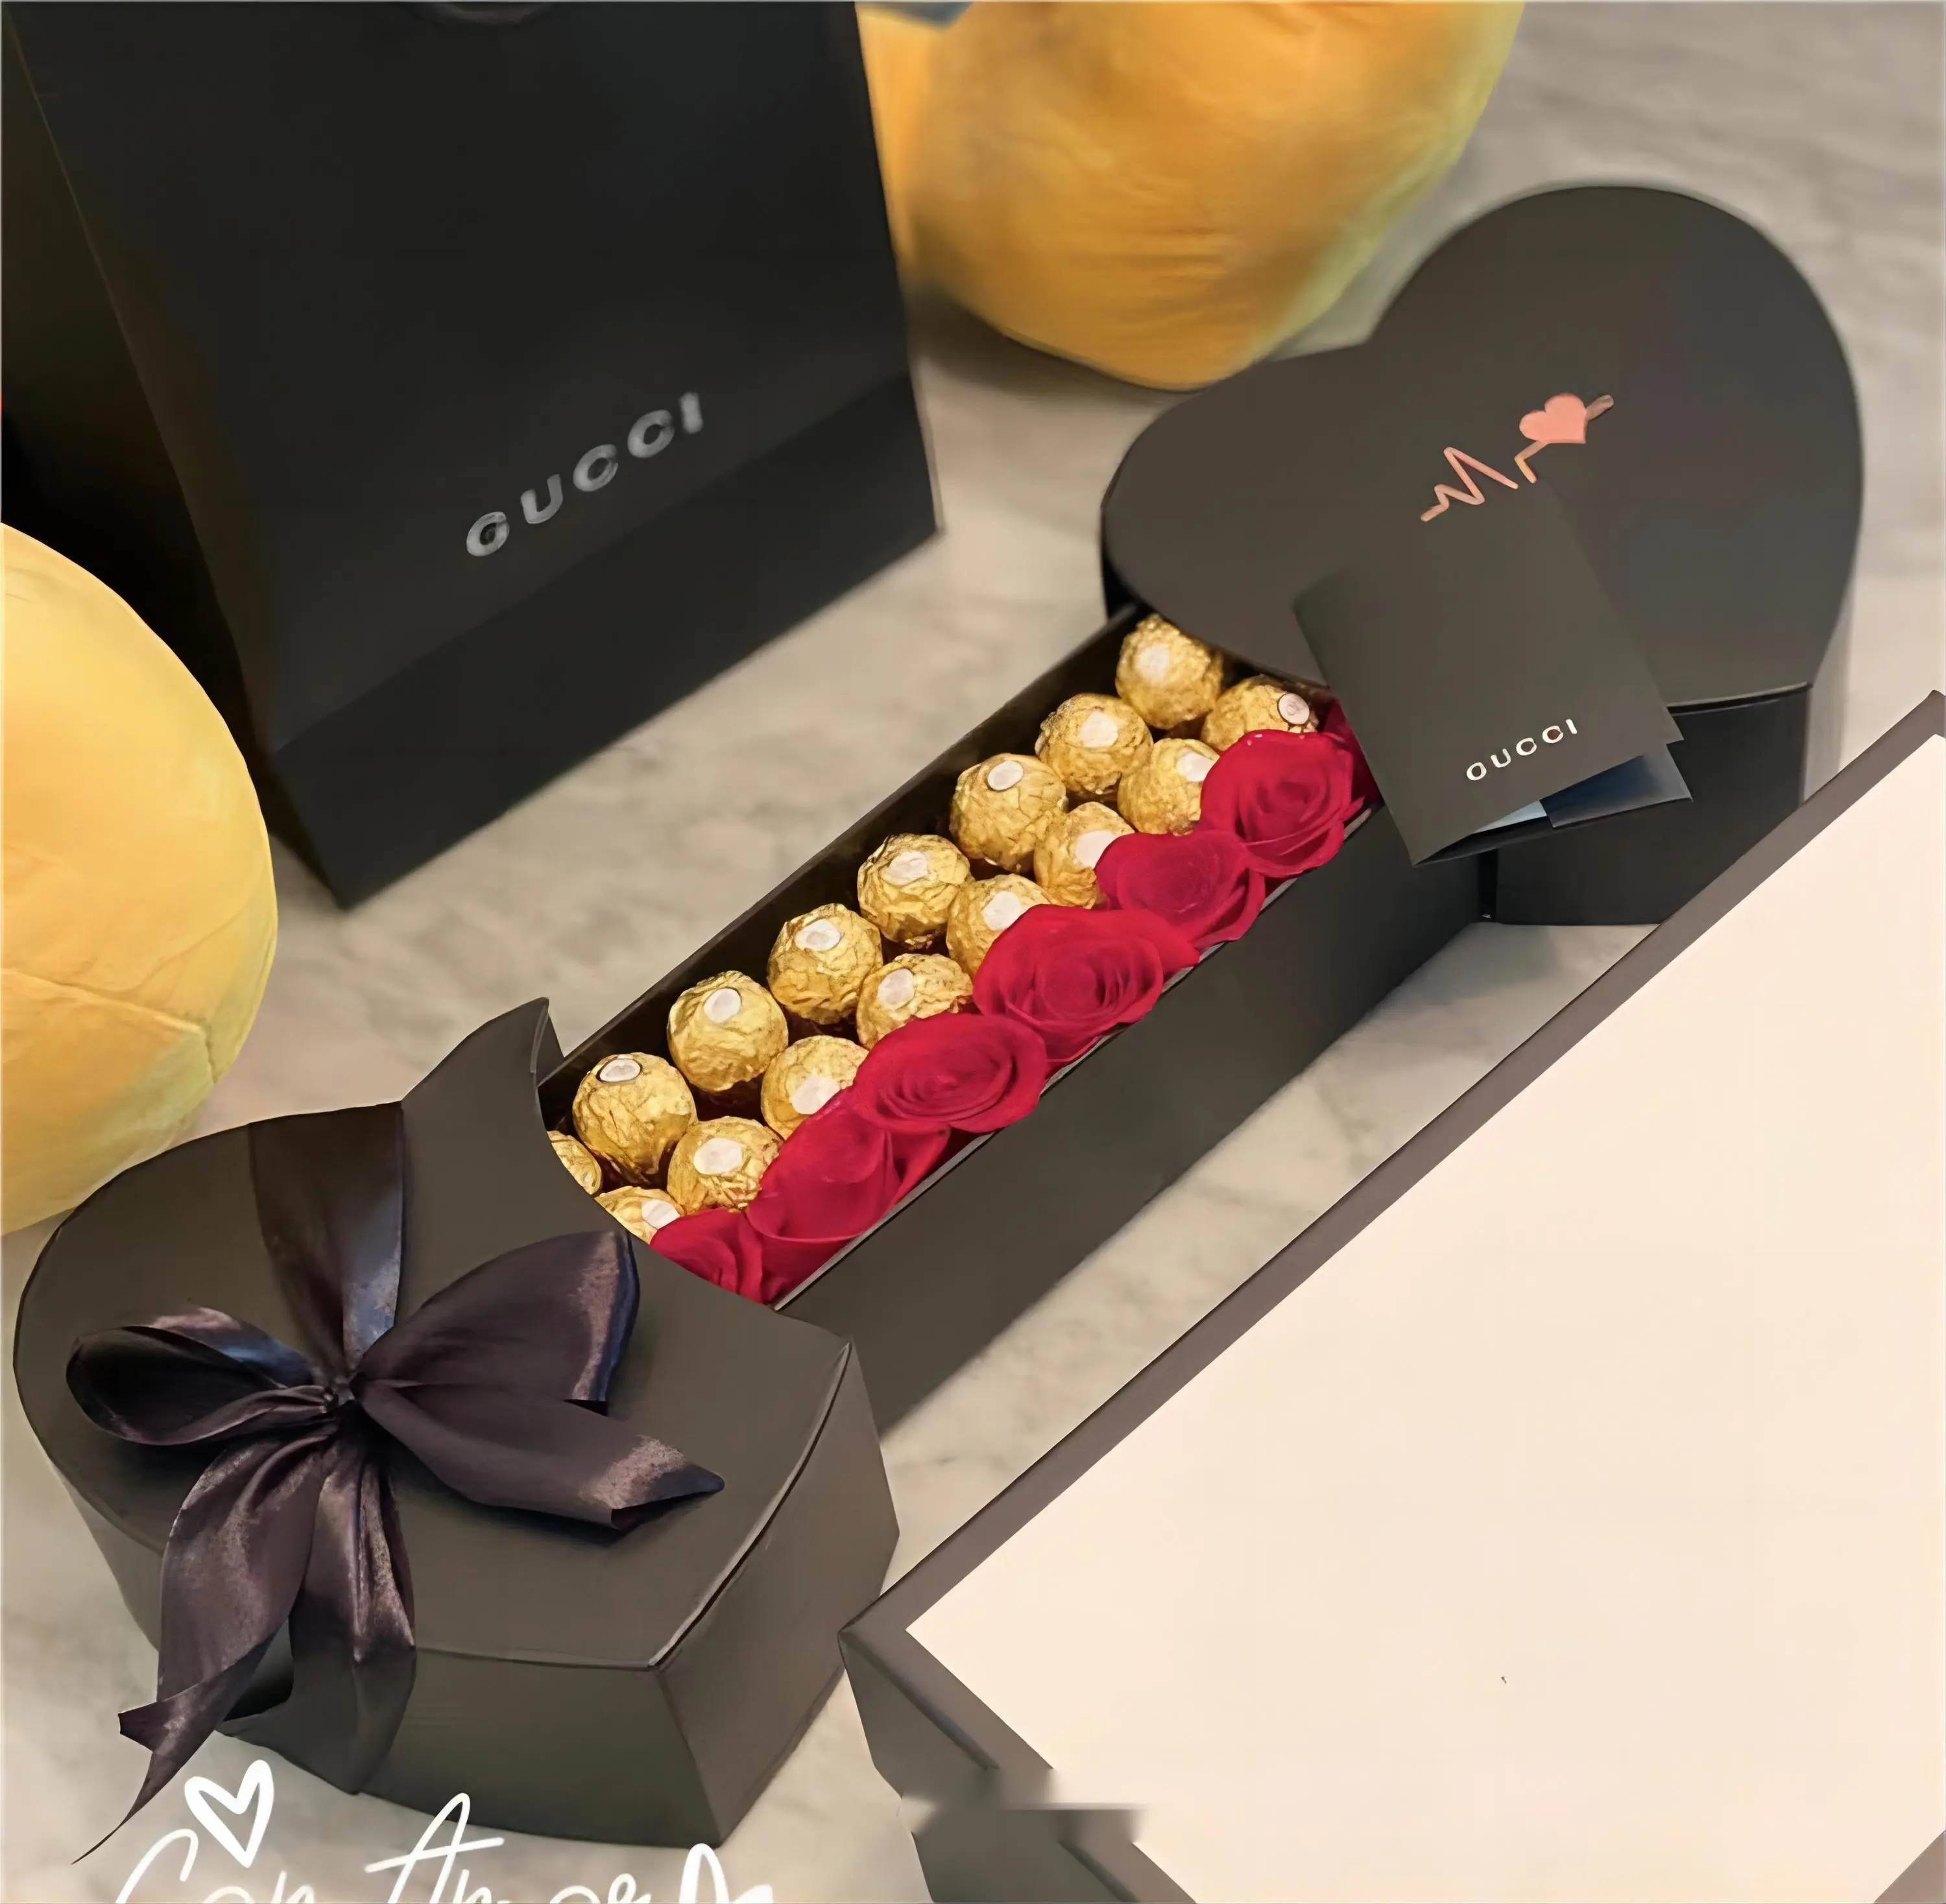 Fabrik verkauft hochwertige Doppel herz kreative Schokolade Geschenk box Seifen blumen verpackung Geschenk box Herz Blumen kasten für Valentin